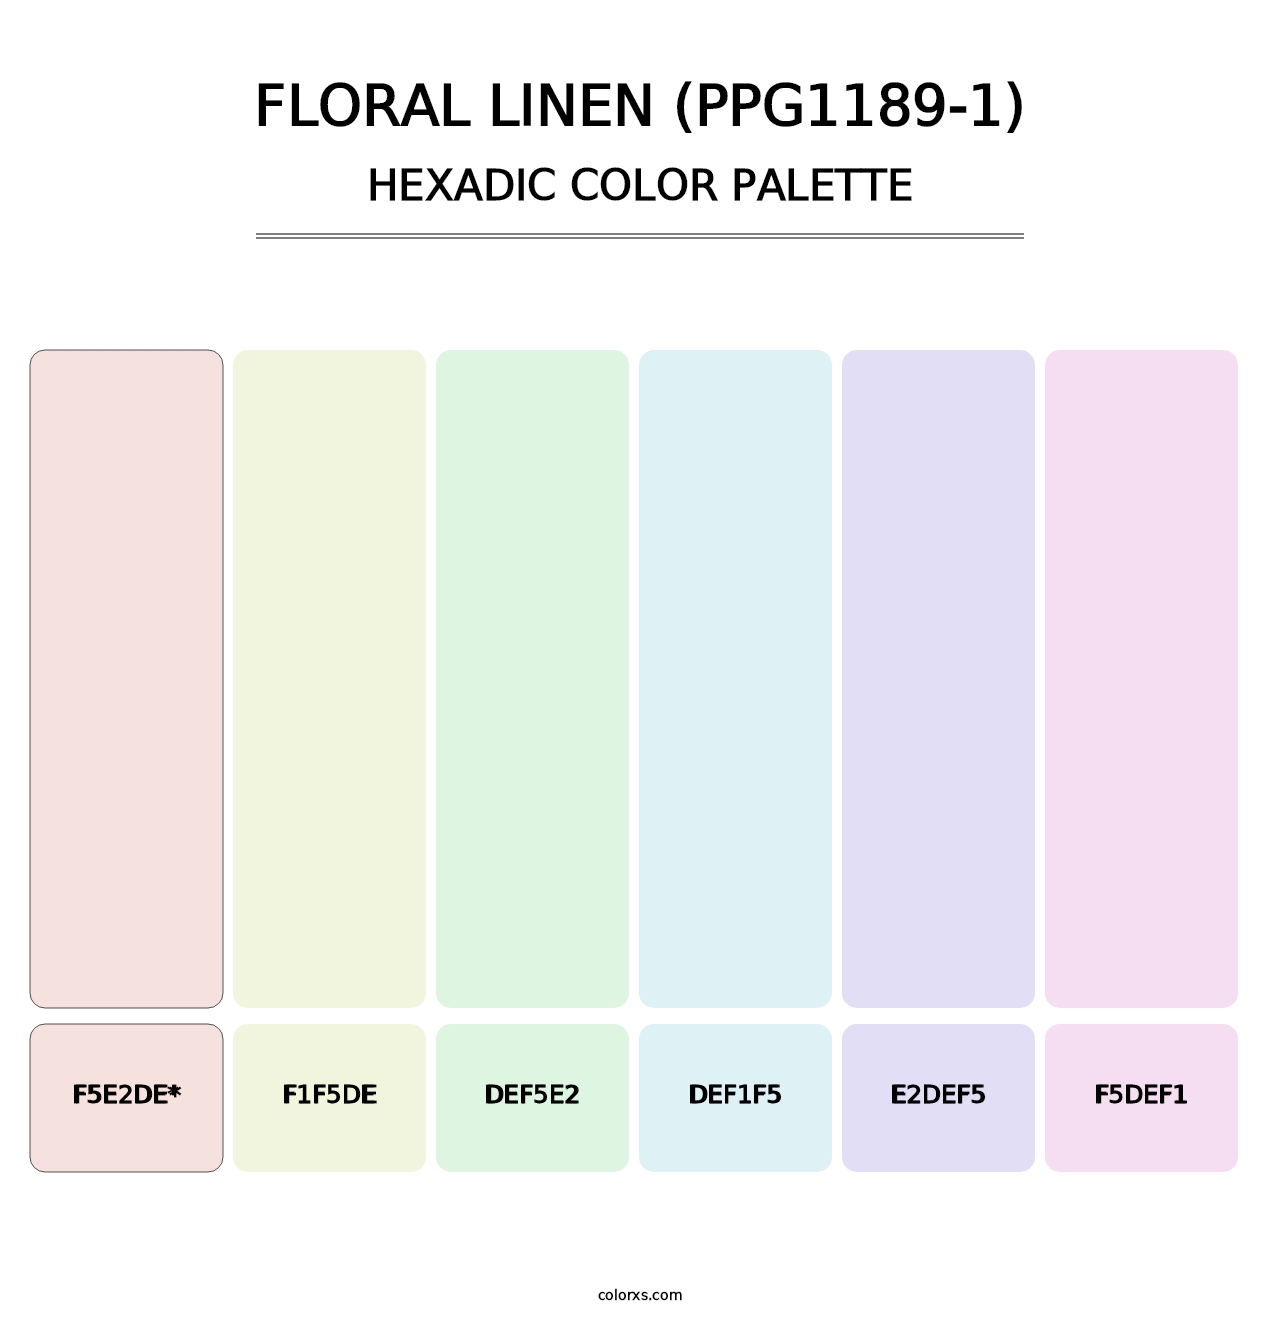 Floral Linen (PPG1189-1) - Hexadic Color Palette